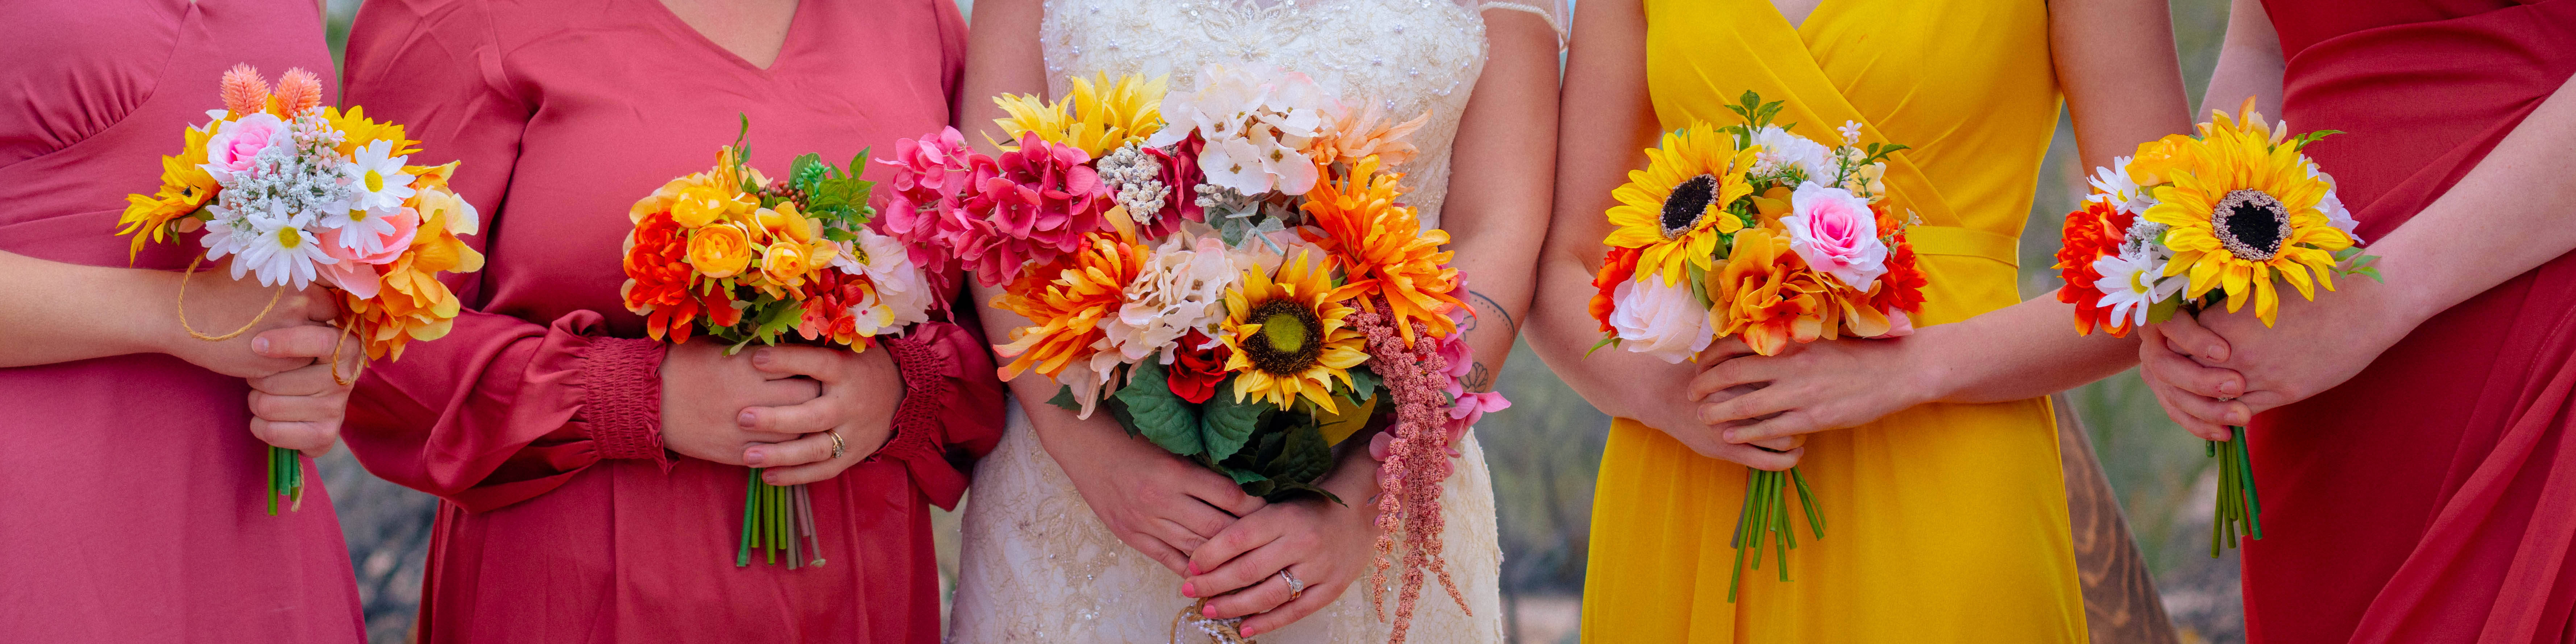 Bridesmaids With Sunflower Bouquet Wallpaper